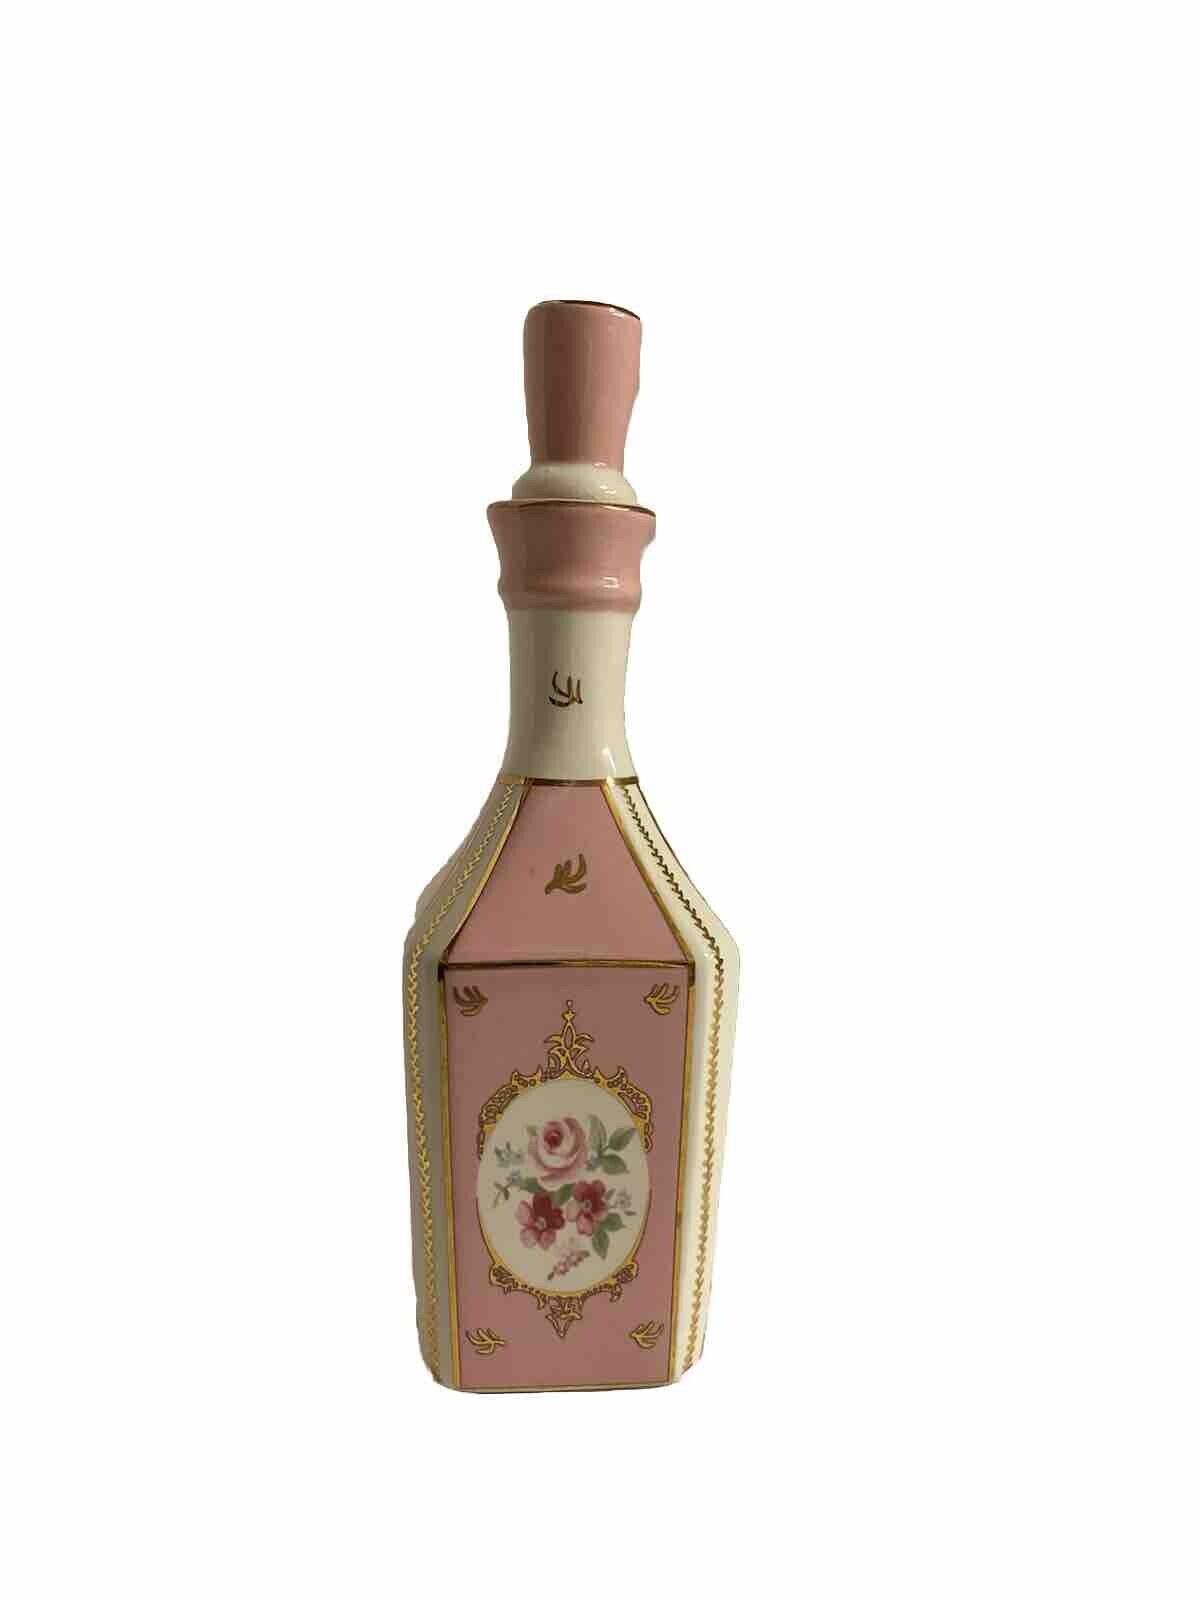 Simply Shabby Chic Pink Rose Porcelain Vanity Perfume Bottle